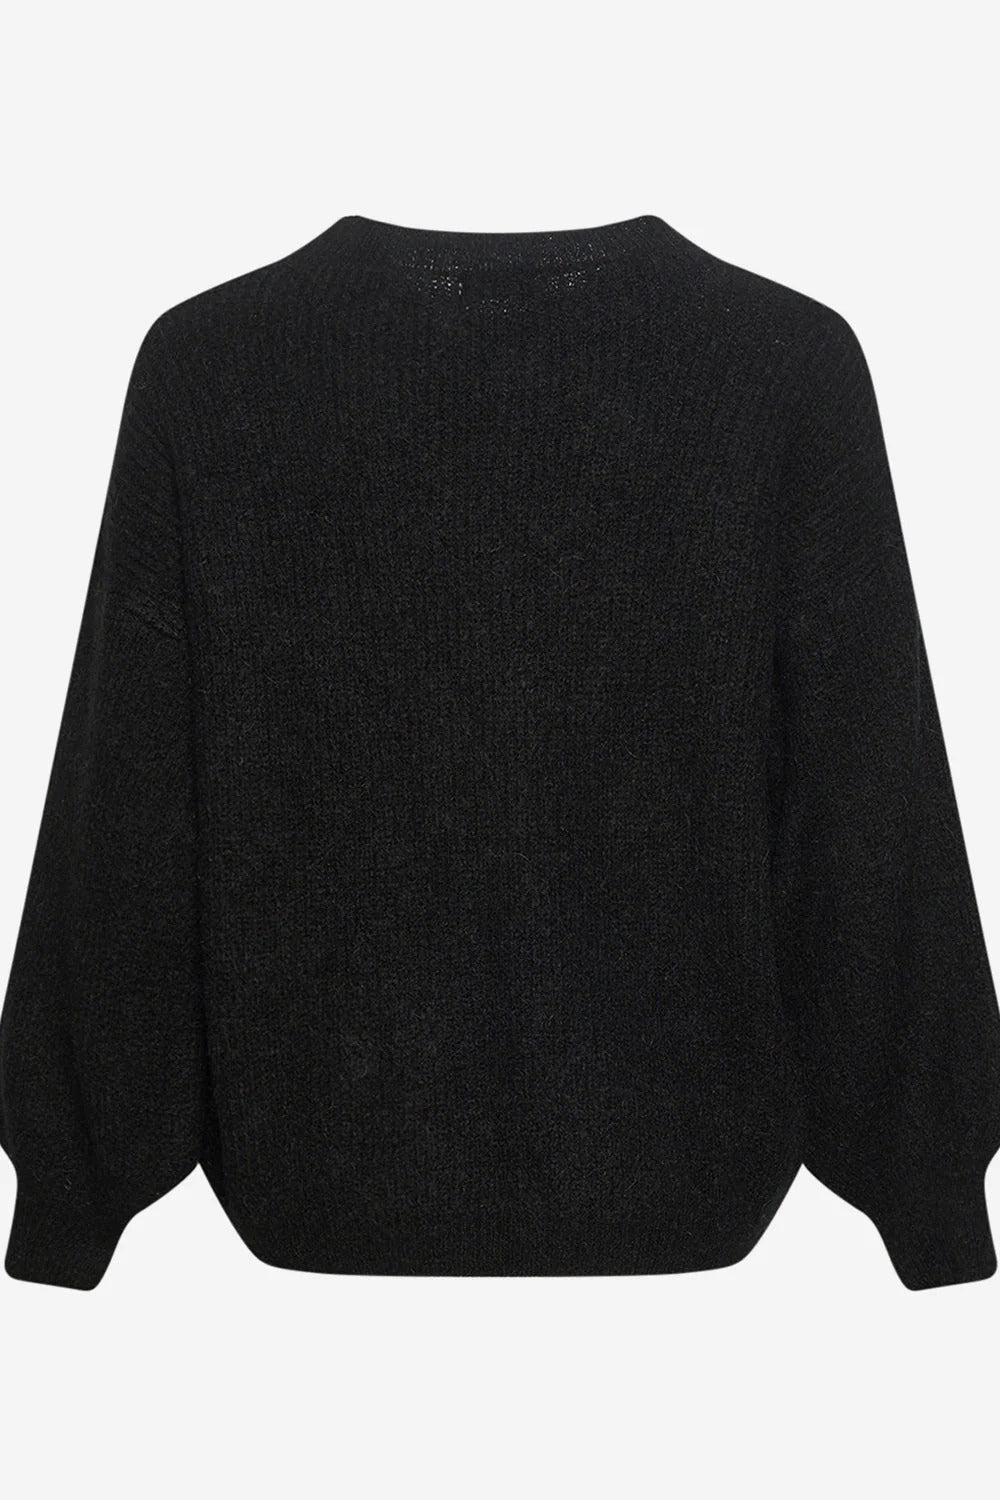 Mira Knit Sweater Black